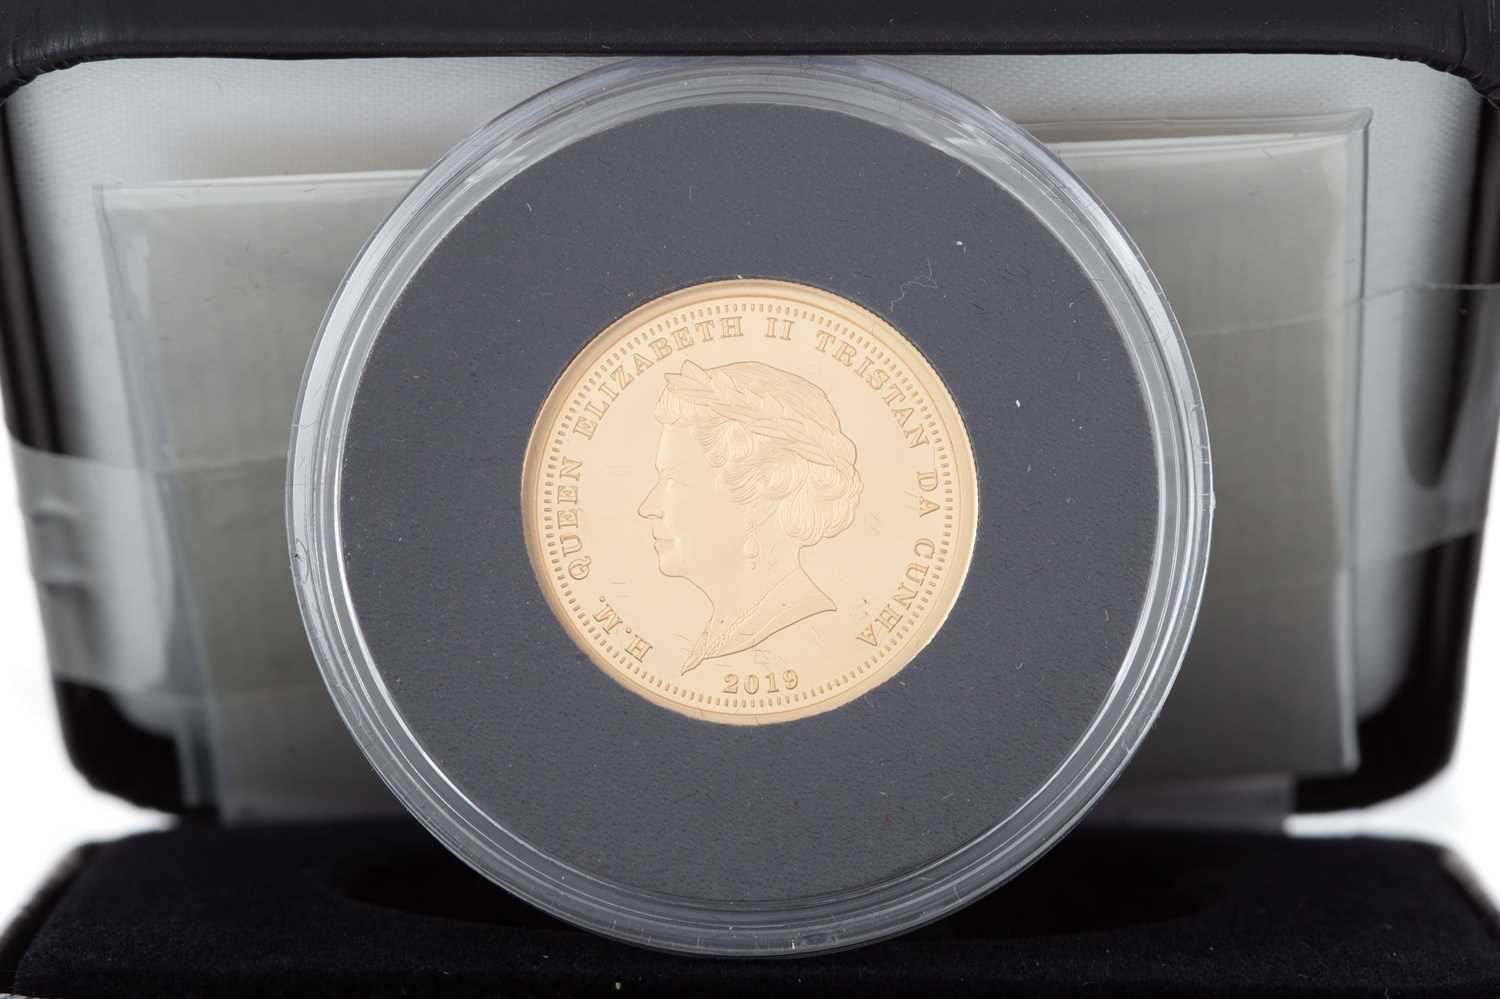 ELIZABETH II 400TH ANNIVERSARY LAUREL GOLD PROOF COIN 2019 - Image 2 of 2